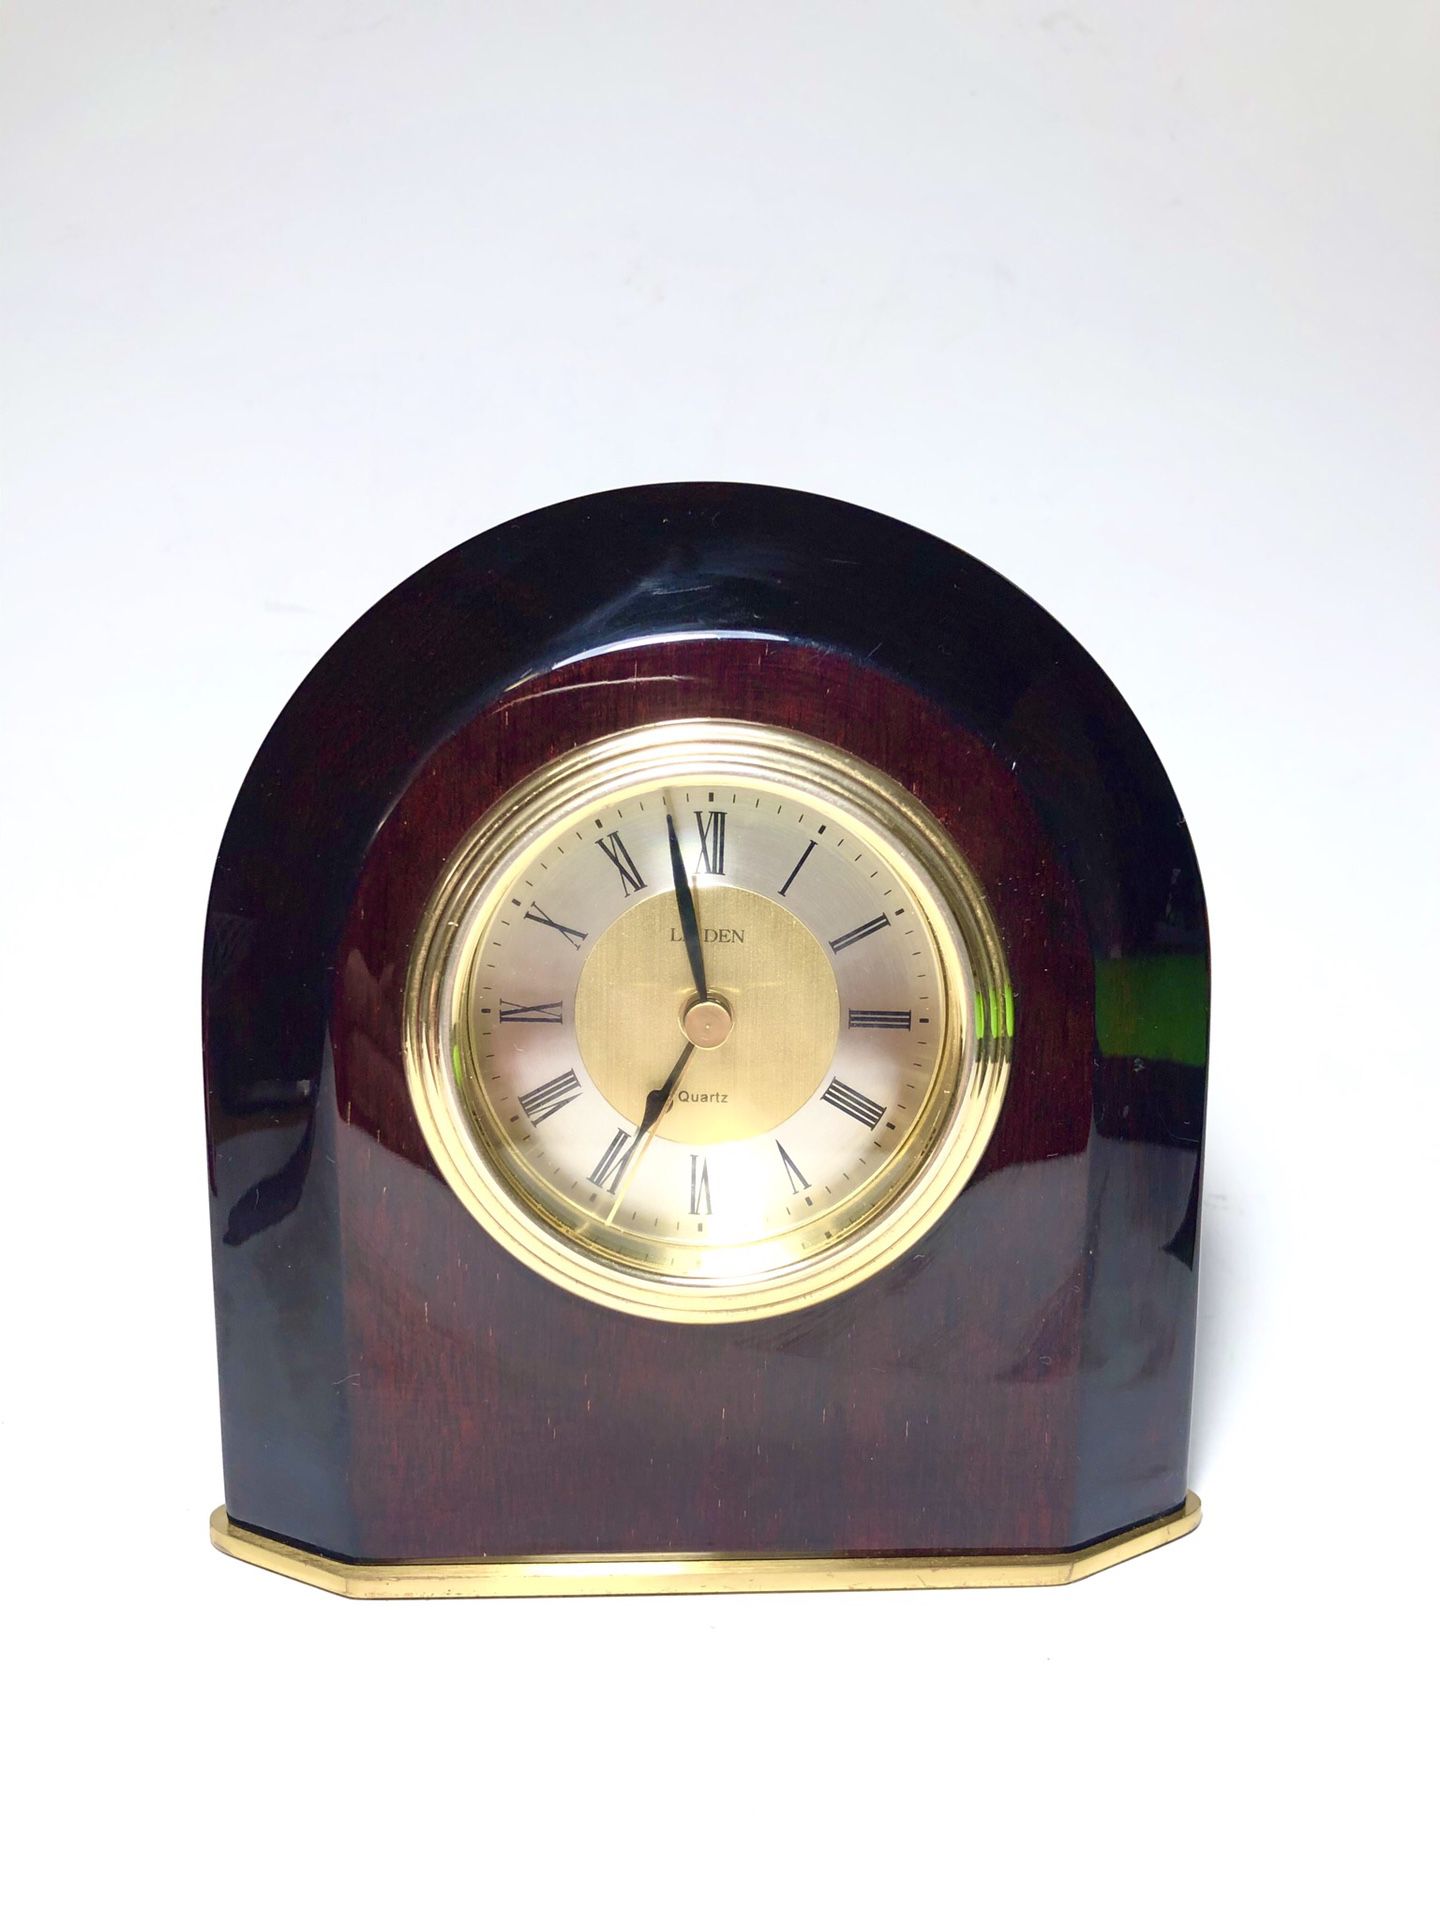 Vintage Linden Wooden Clock with Alarm Function